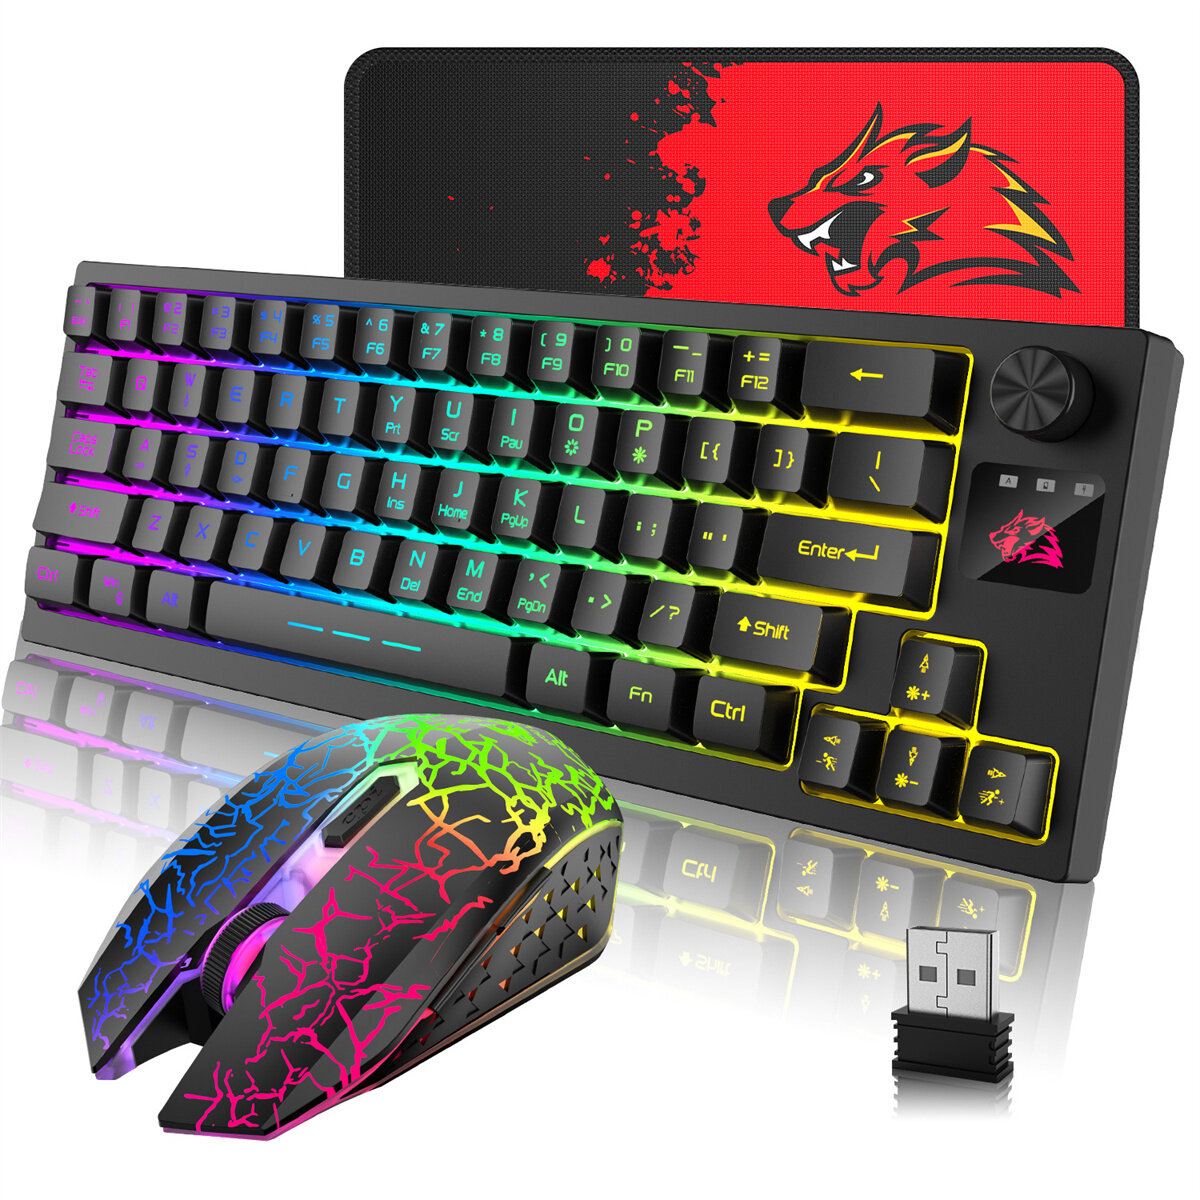 ZIYOULANG T50 2.4G Wireless Keyboard Mouse Combo 64-Keys Translucent RGB Backlit Gaming Keyboard Adj